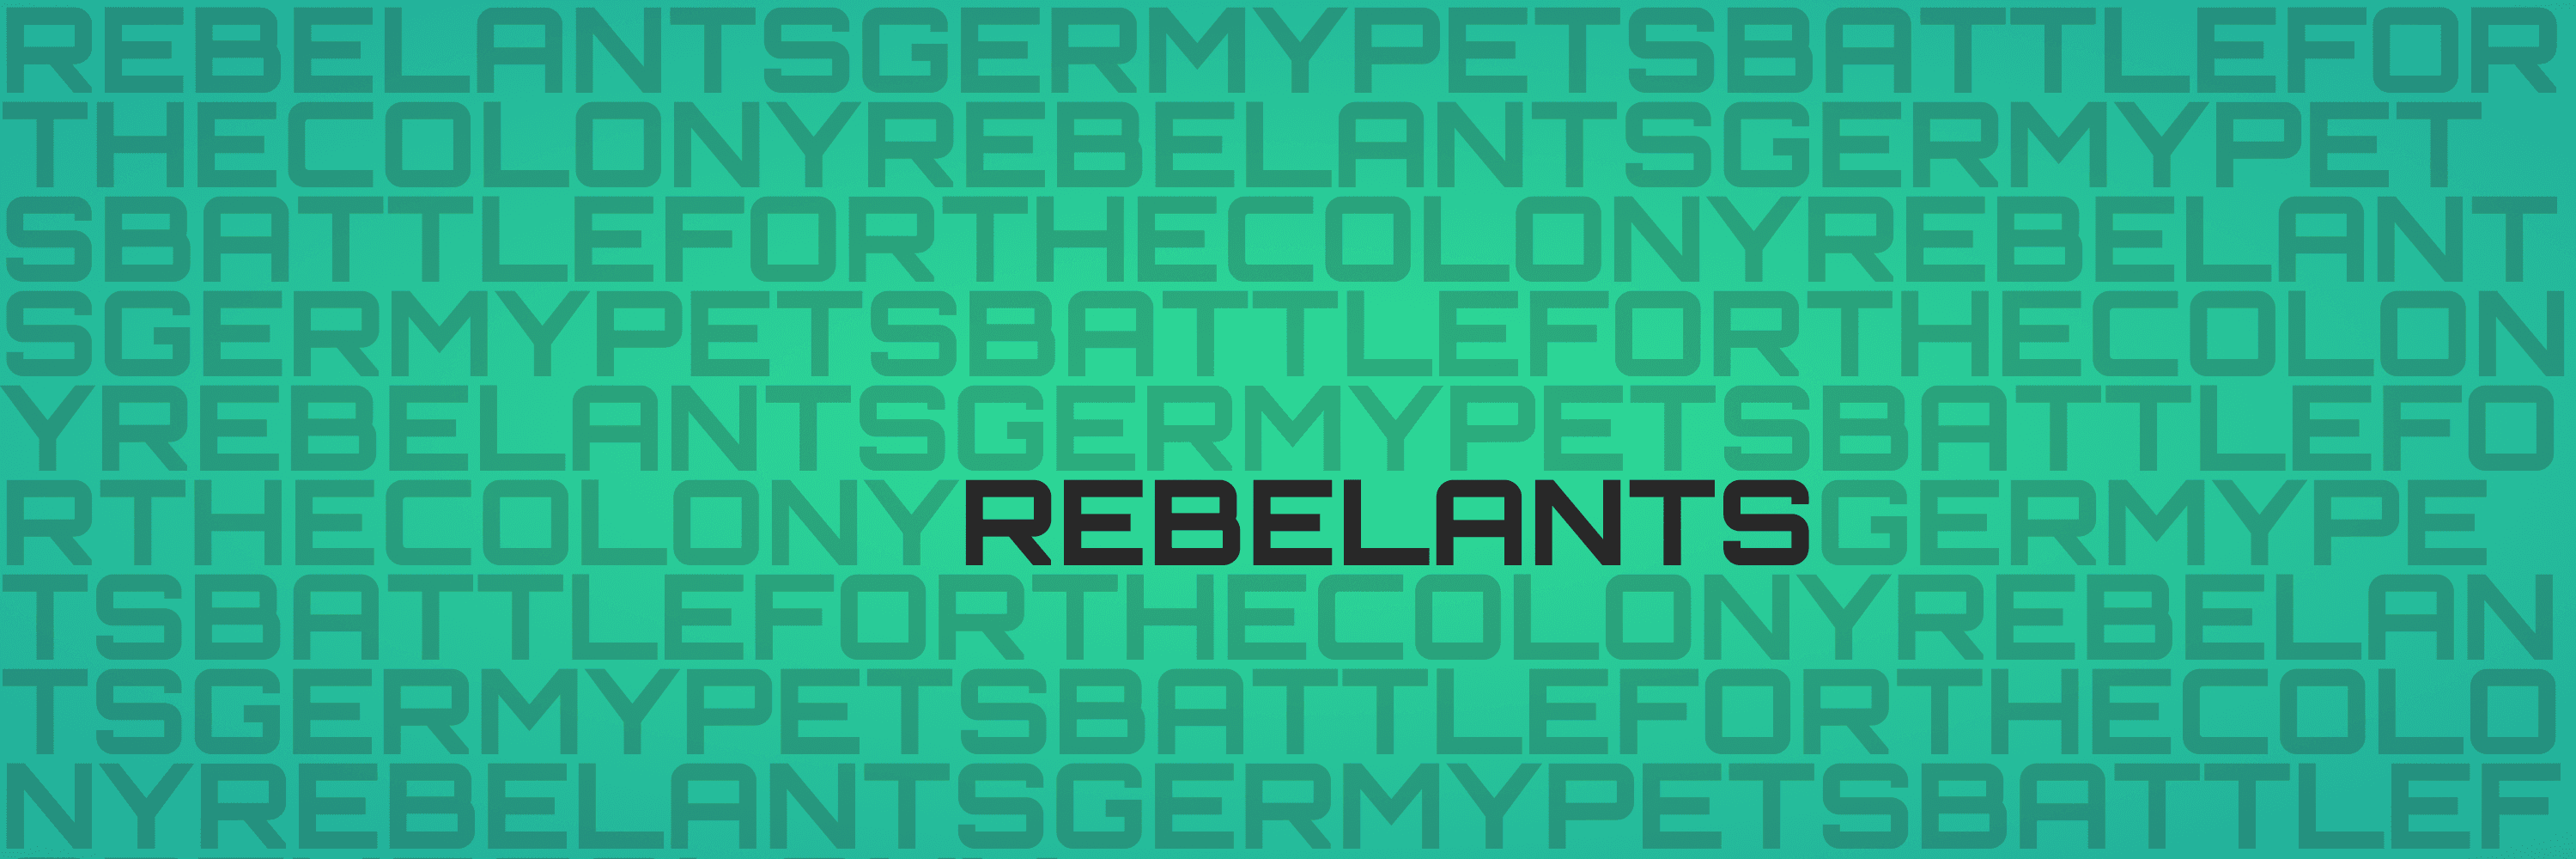 RebelAnts_LLC banner